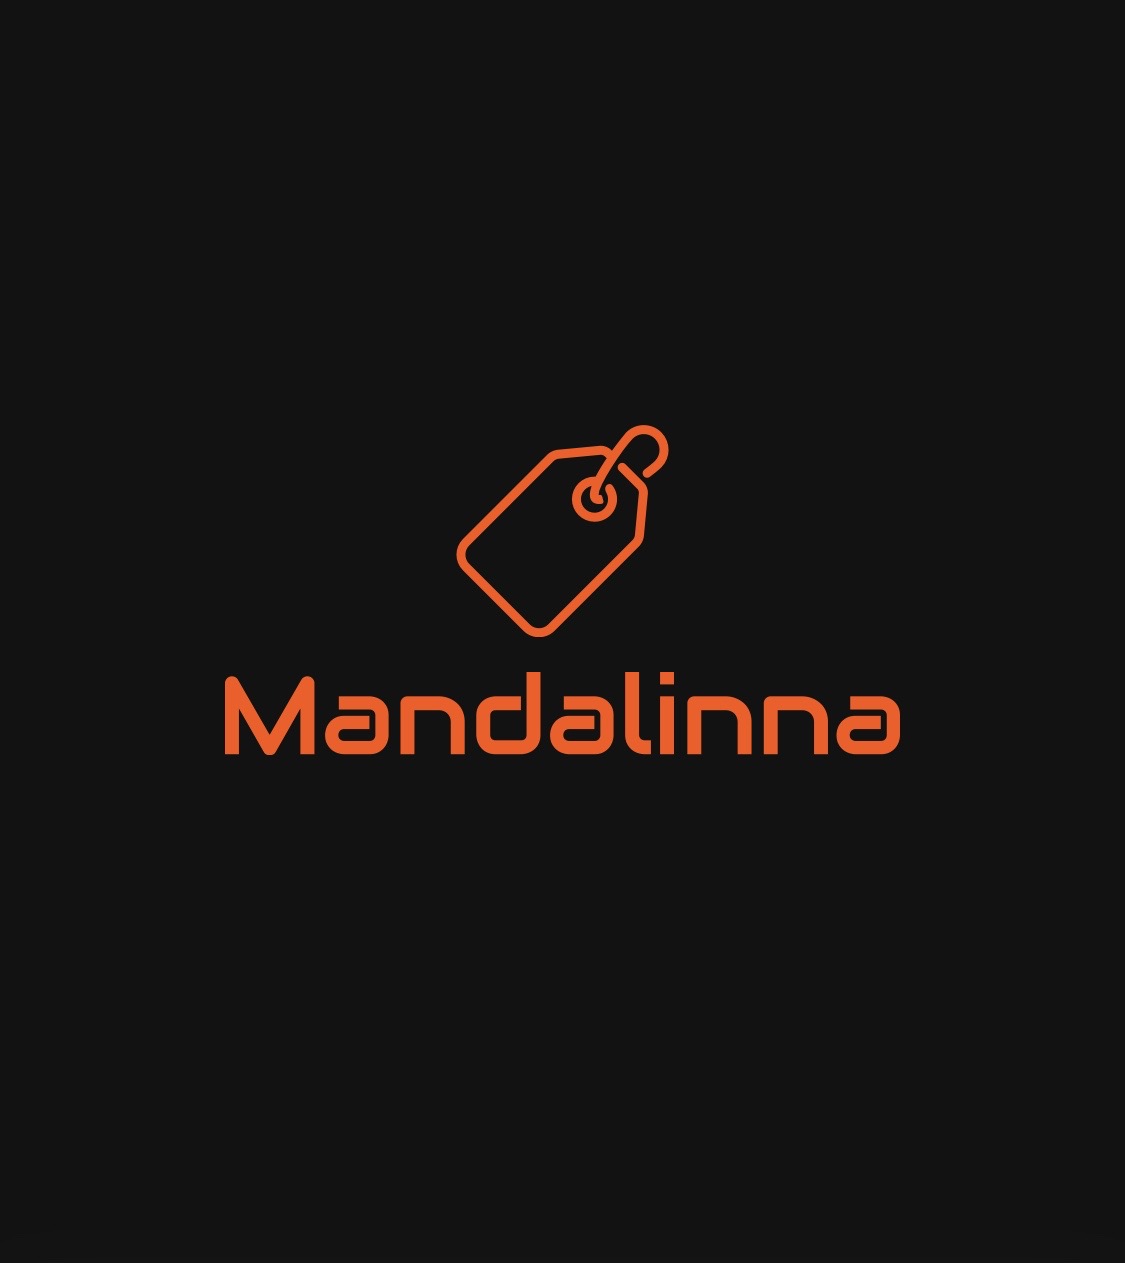 Mandalinna